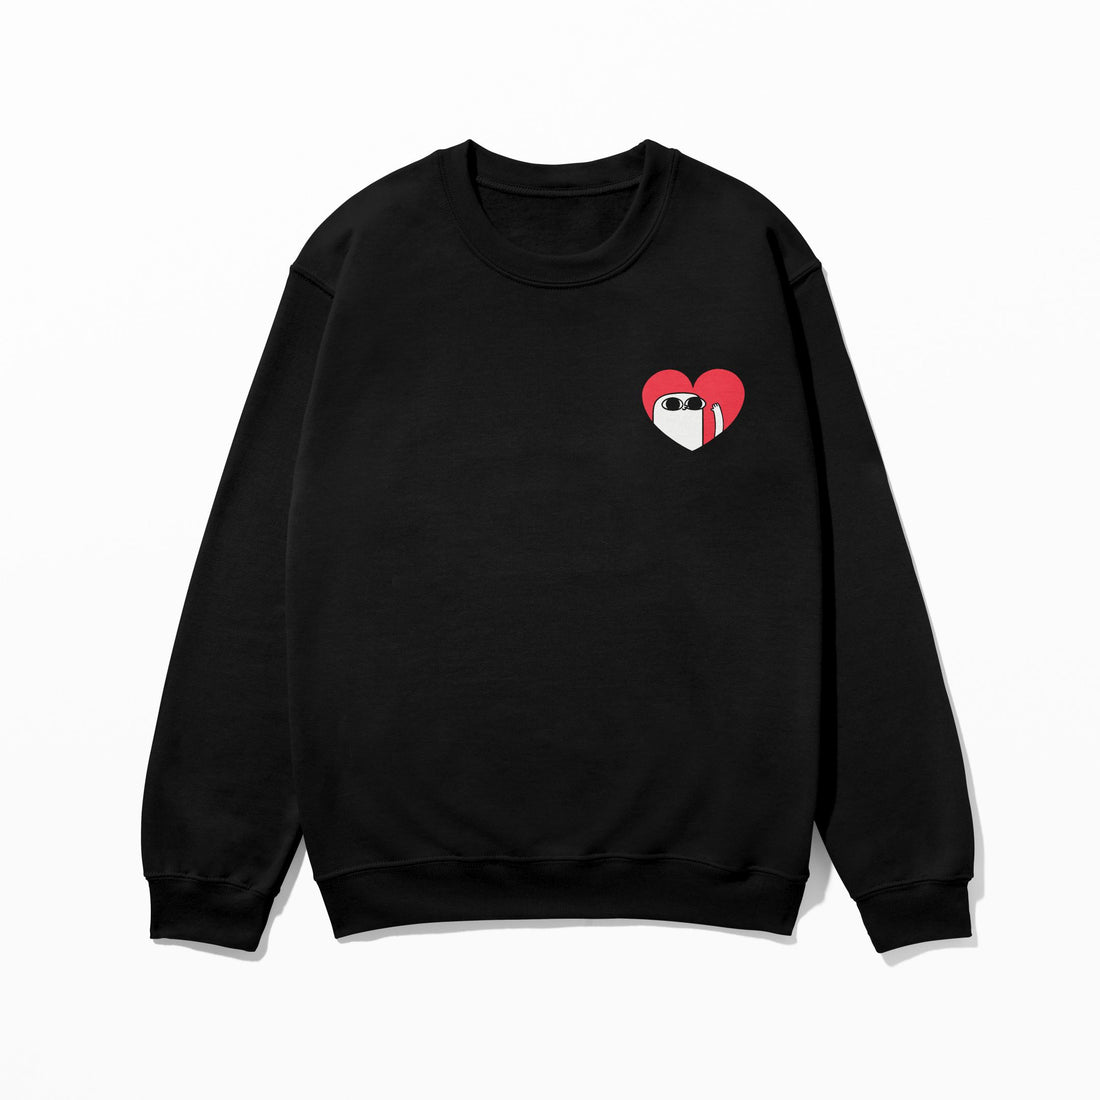 I'm Lover - Sweatshirt